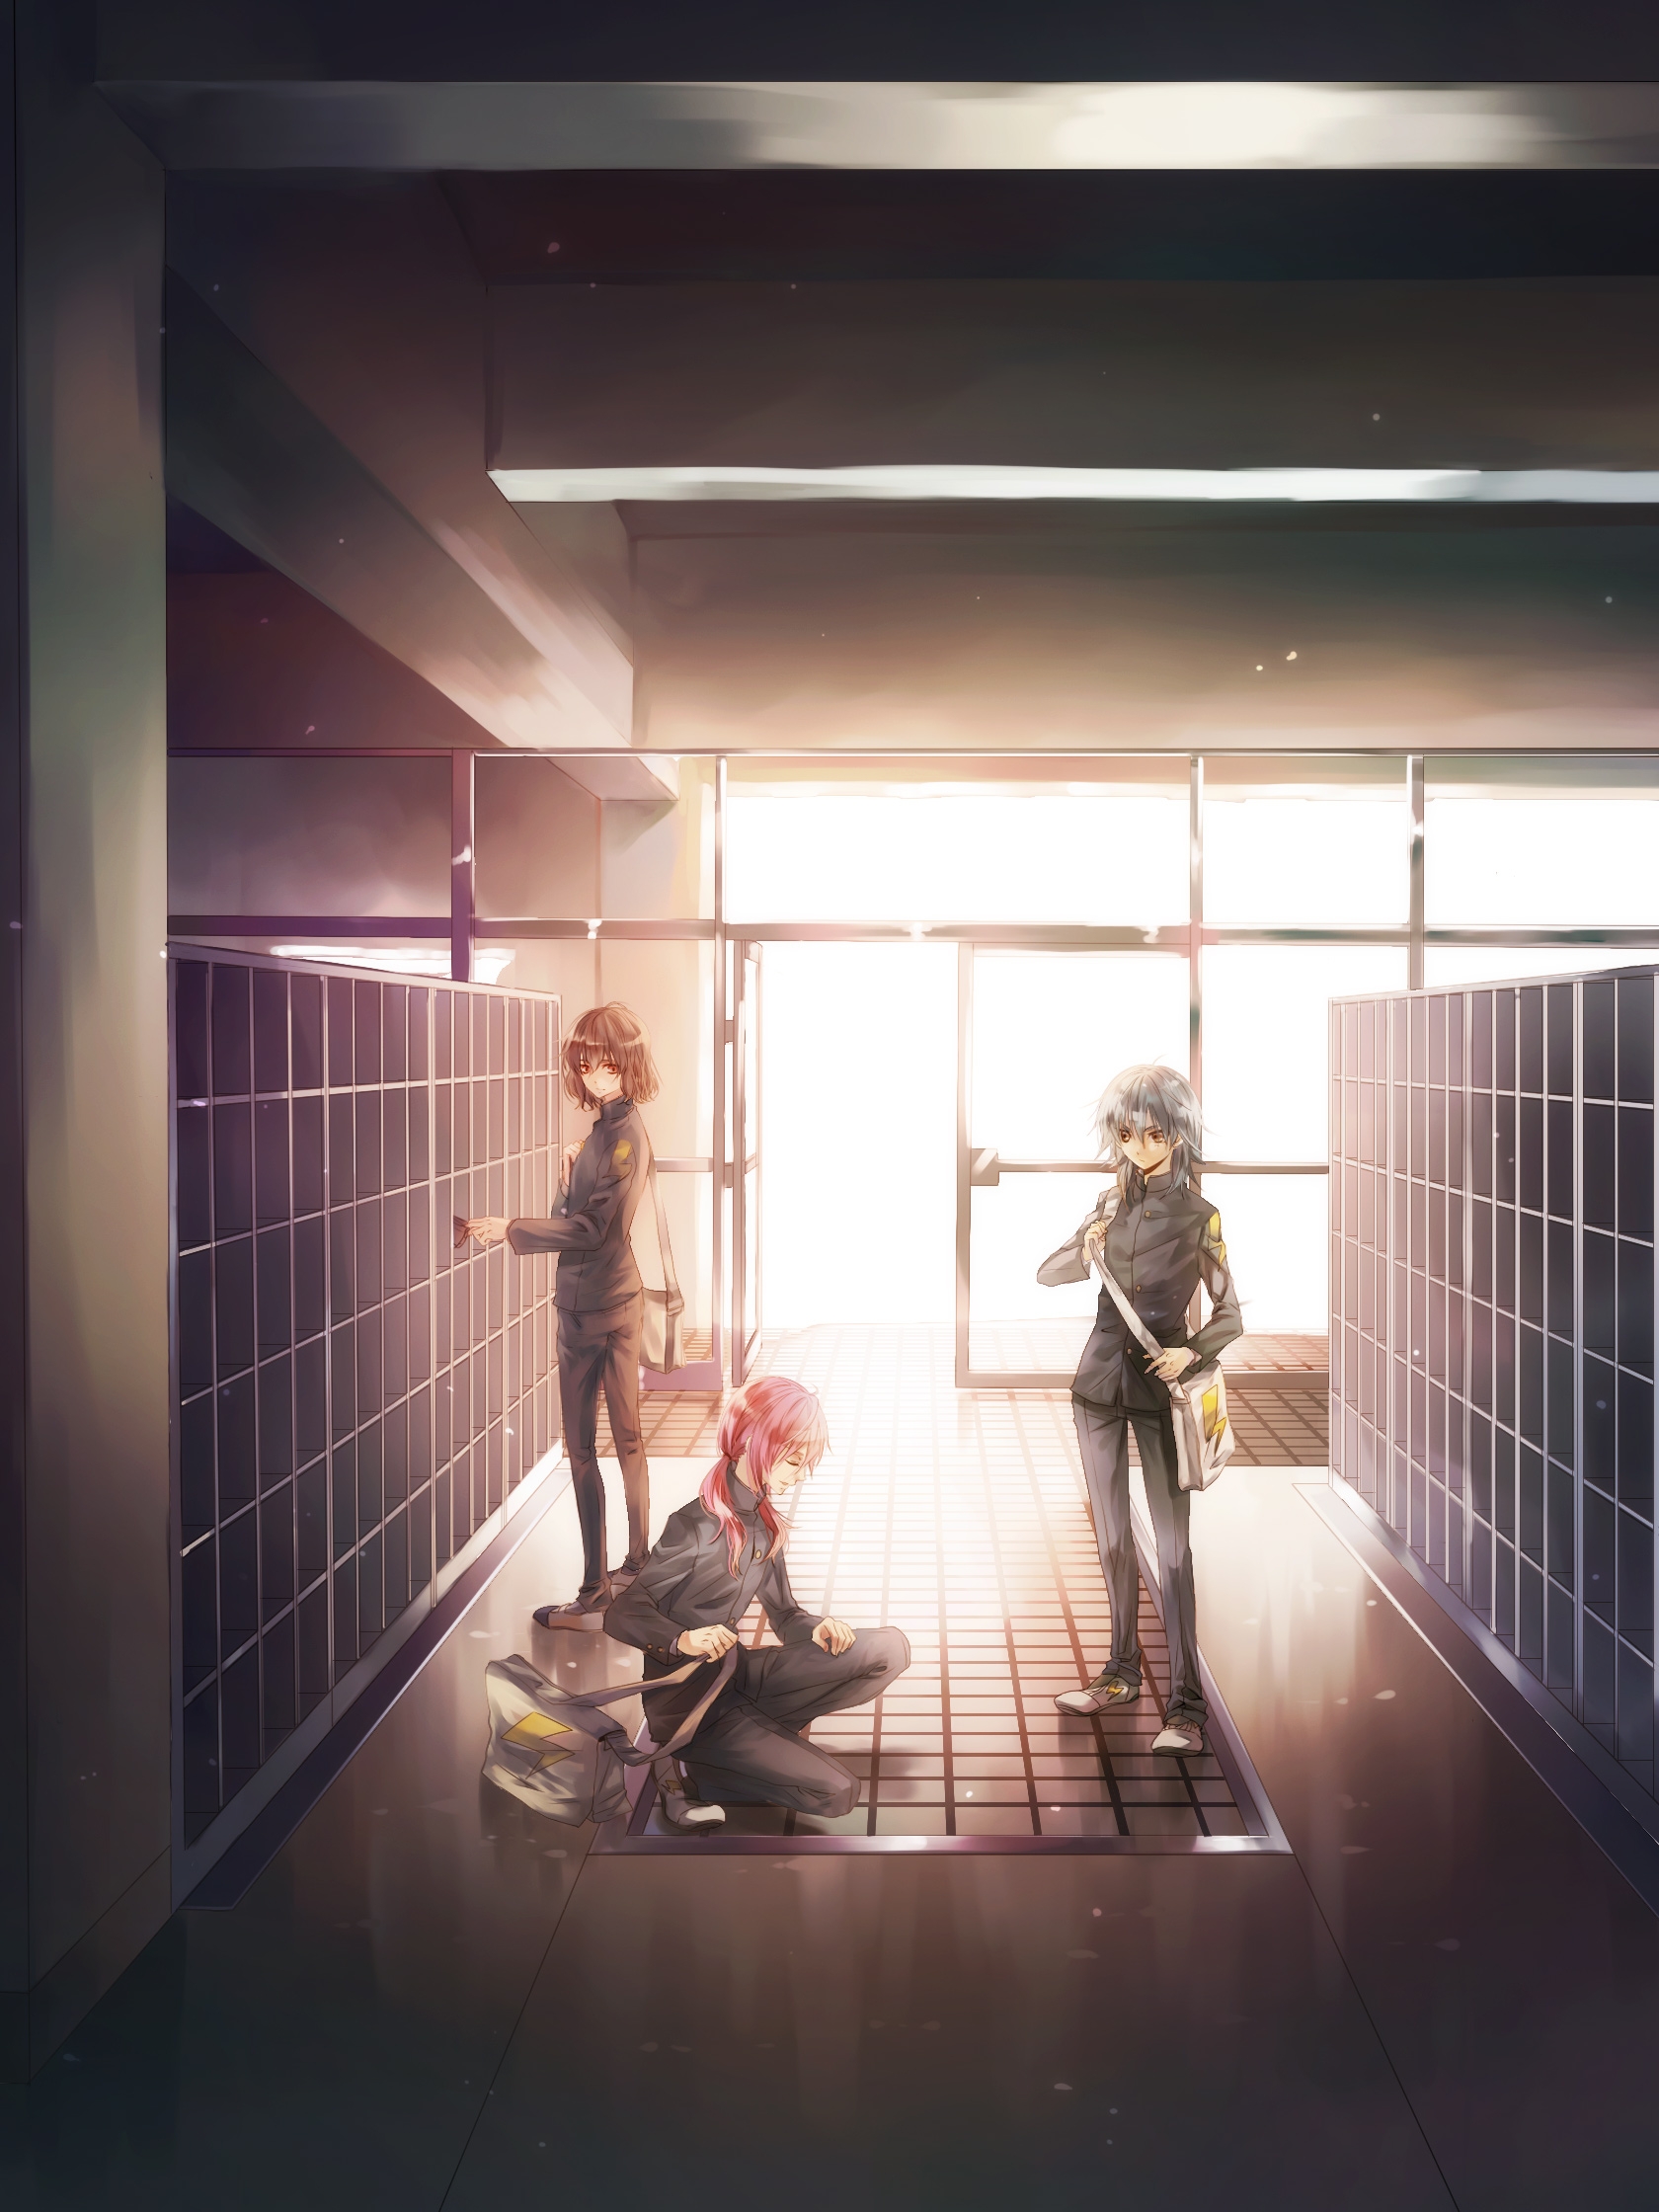 Anime Corridor School Students Light Portfolio Stock Photos